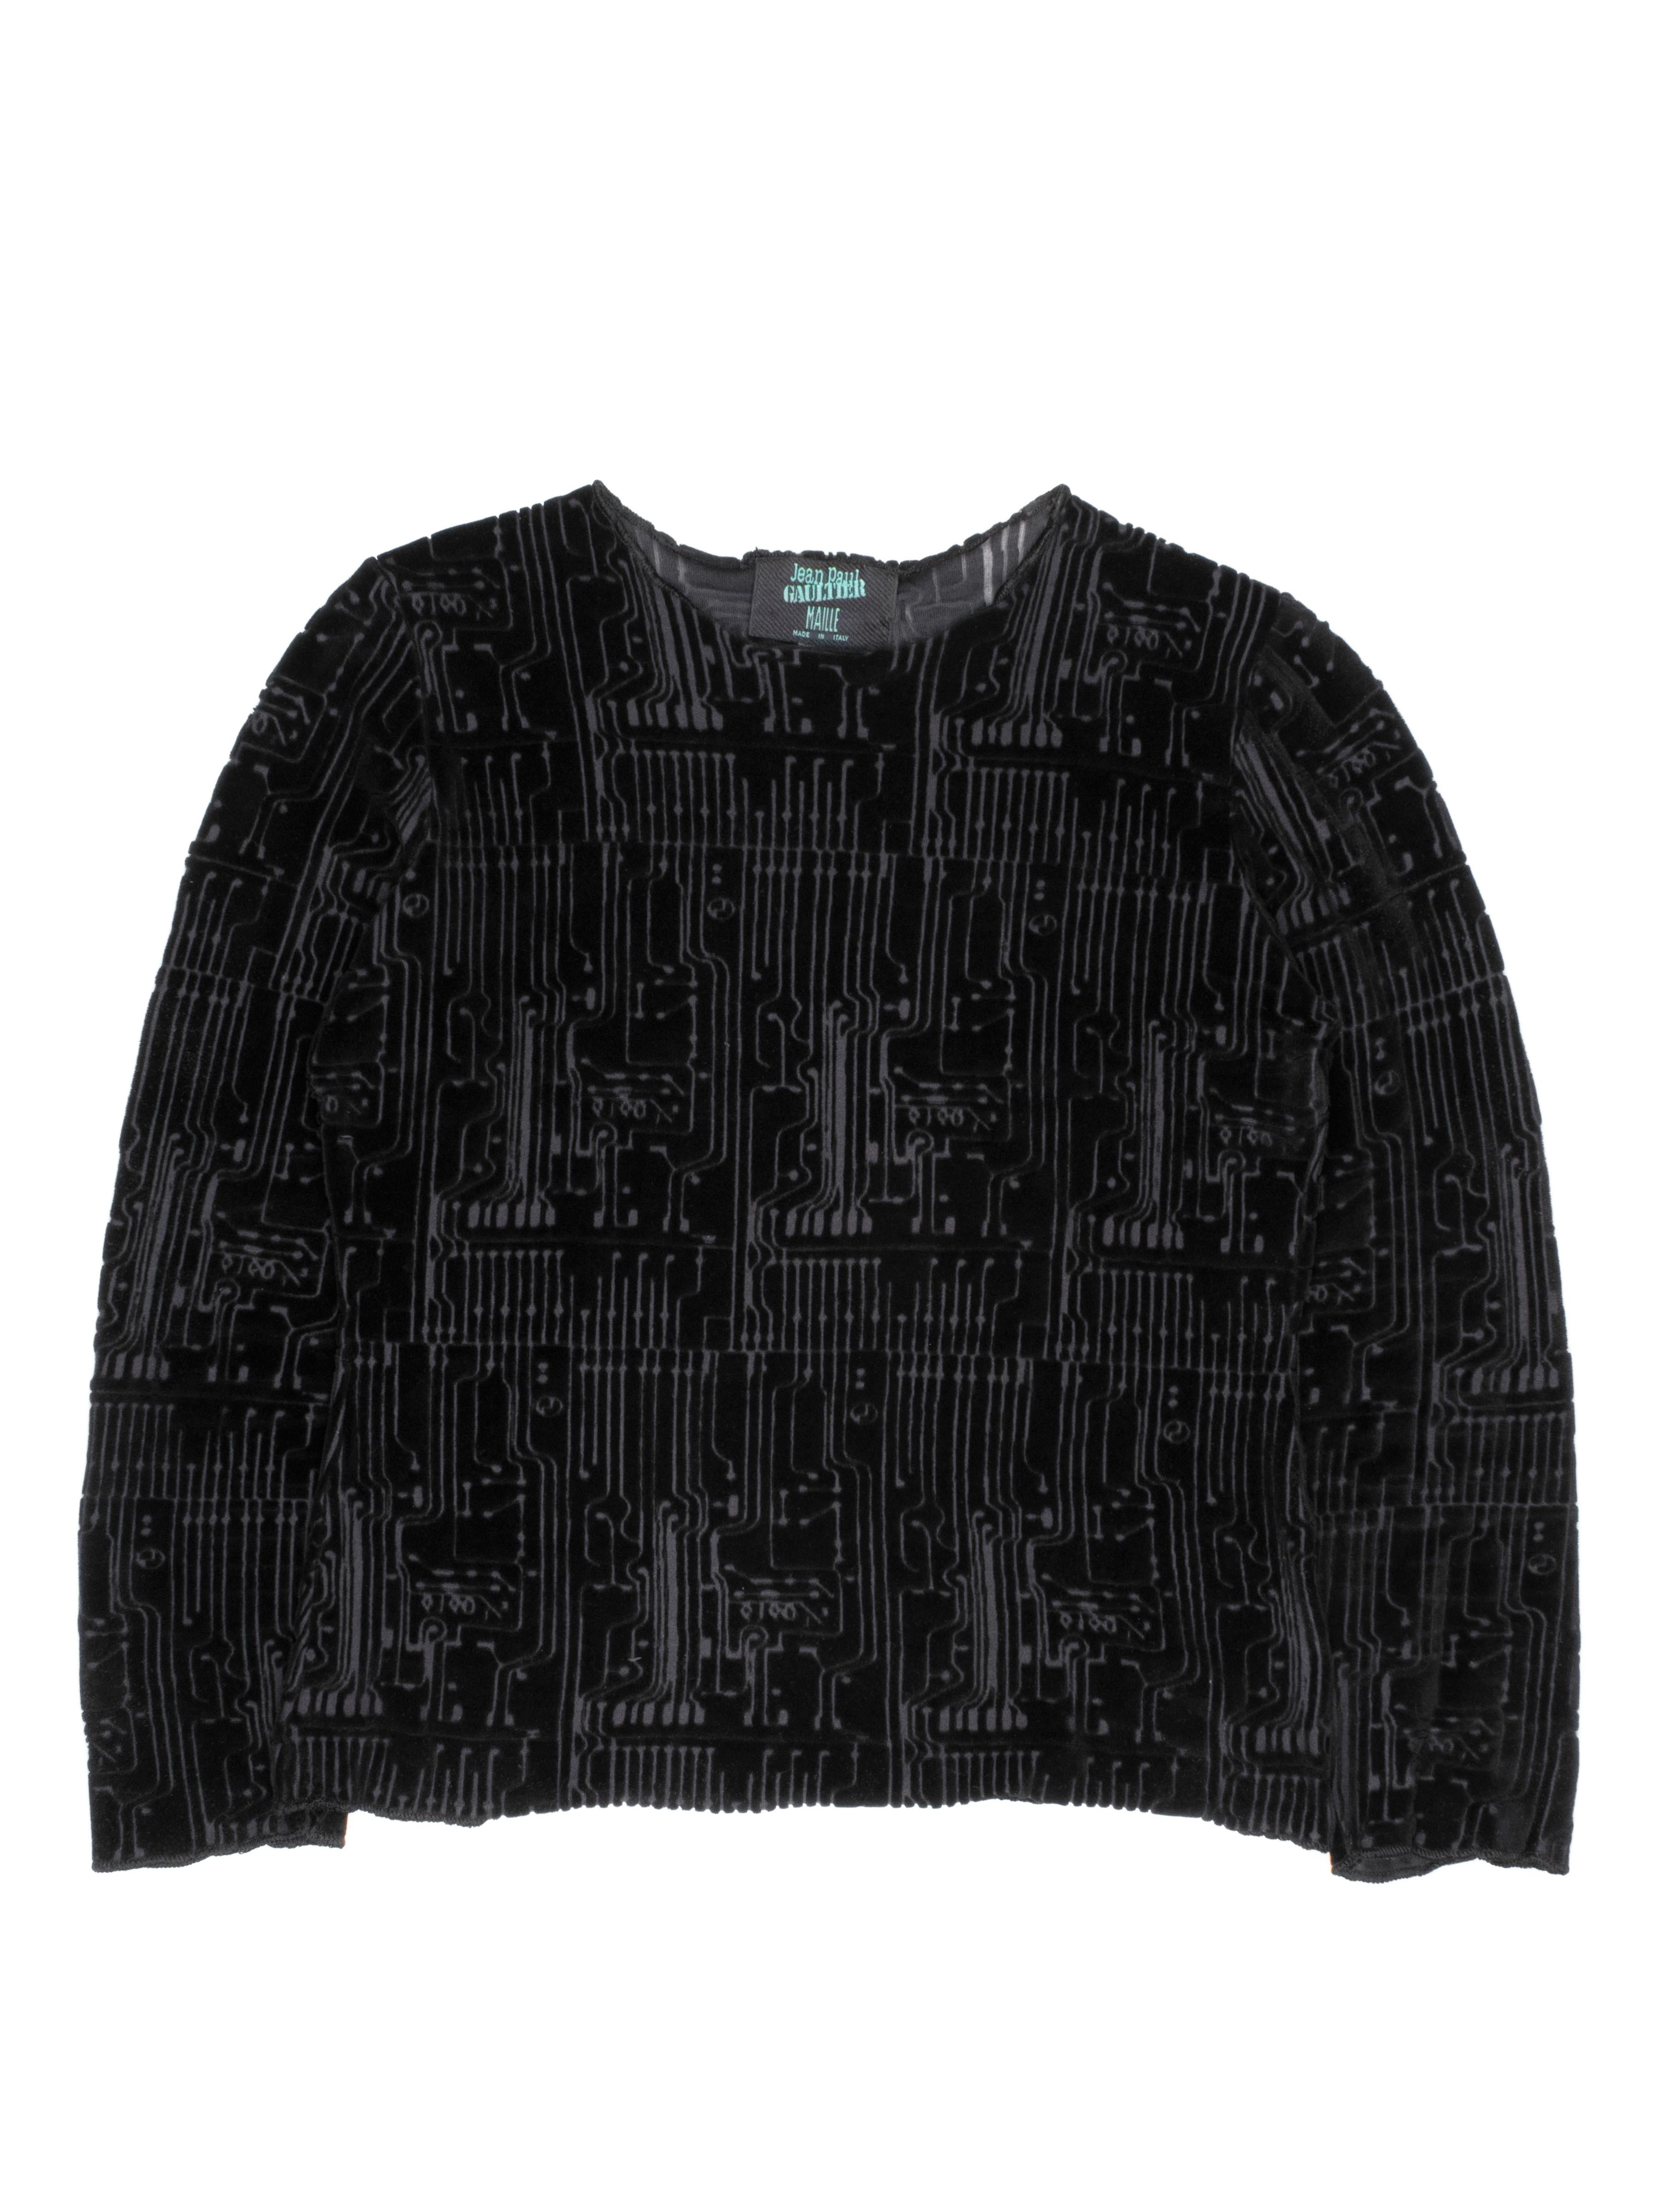 circuit board sweater from jean paul gaultier aw1995